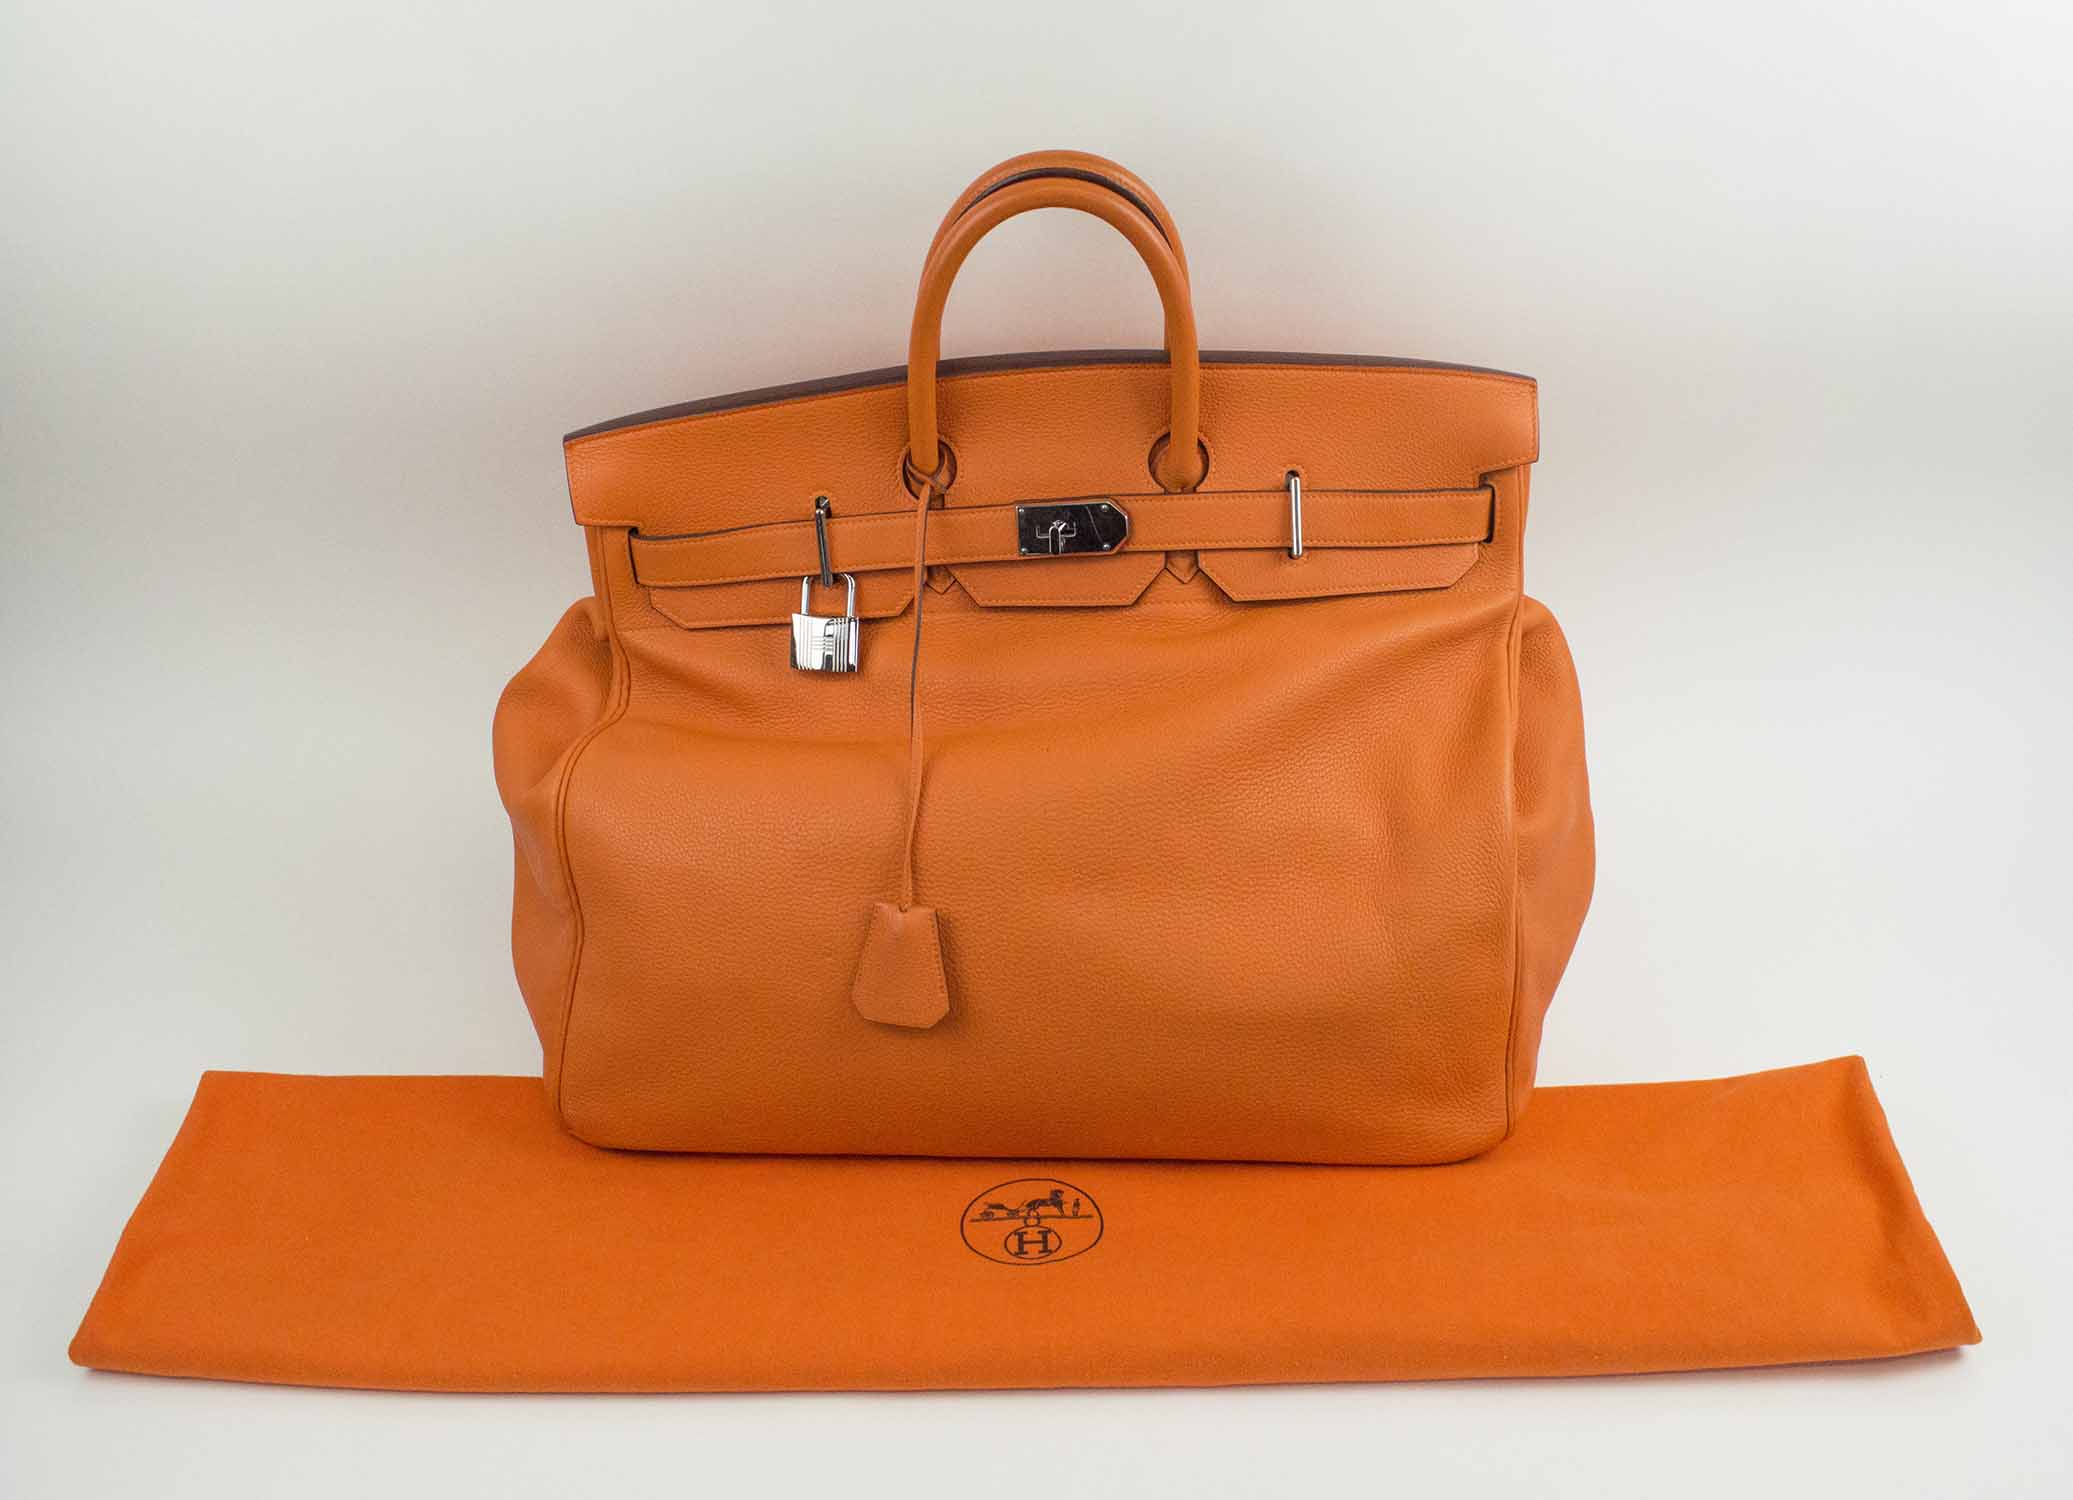 Hermès Haut à Courroies: The Original Birkin Bag